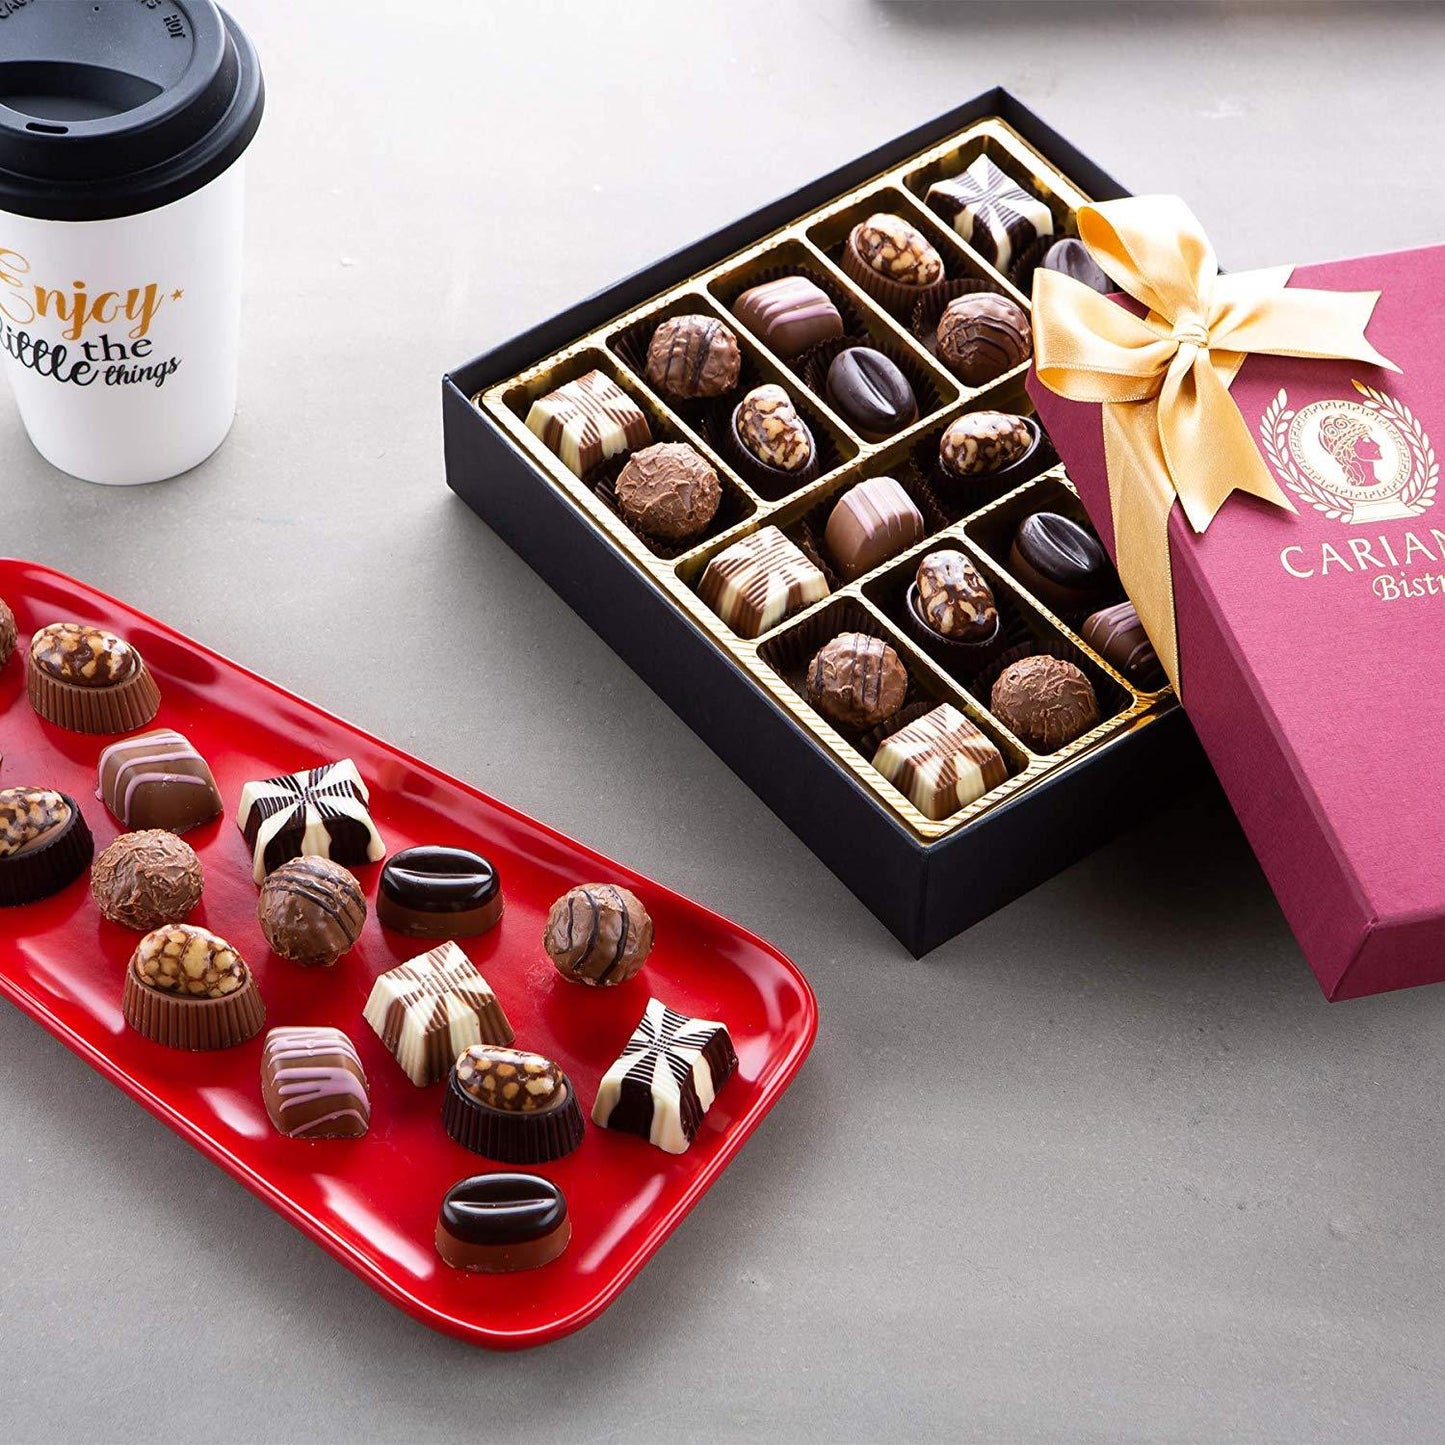 Bistro Chocolate Box Luxury Selection